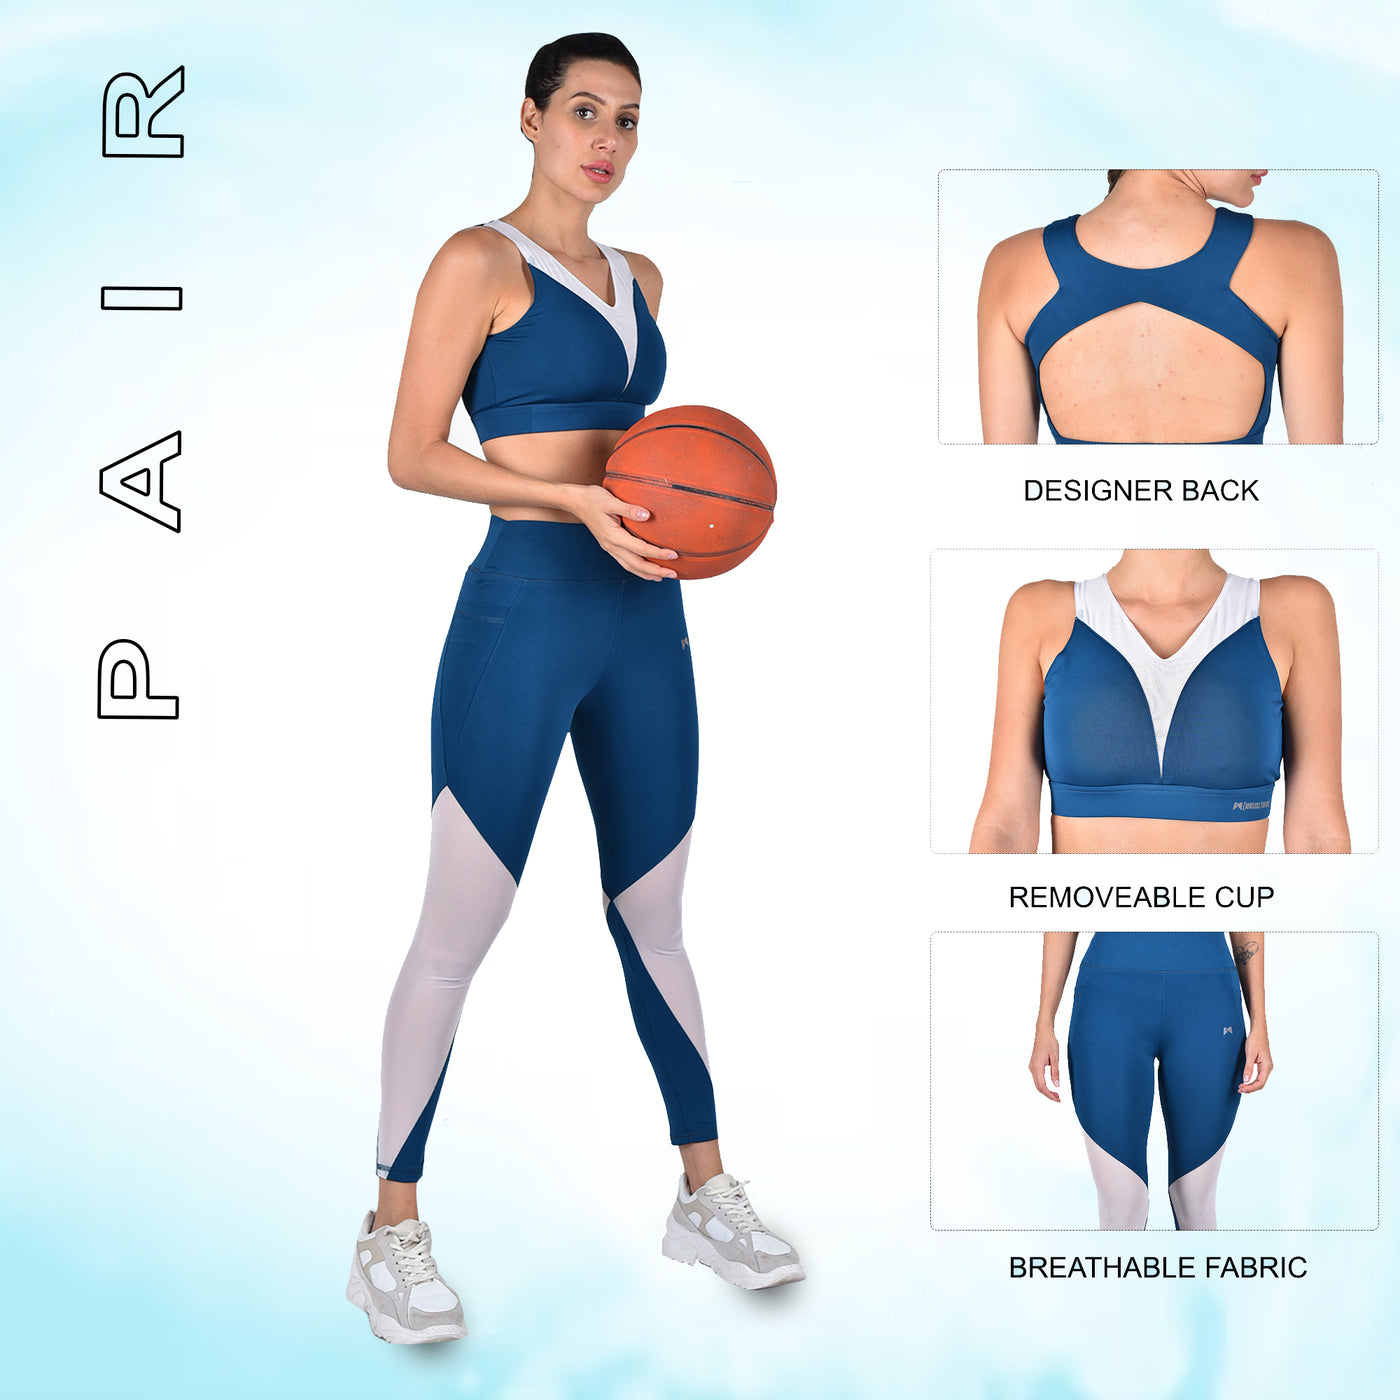 Pair of High Waist Mesh Tight & High Impact Back Design Sports Bra – Teal Blue